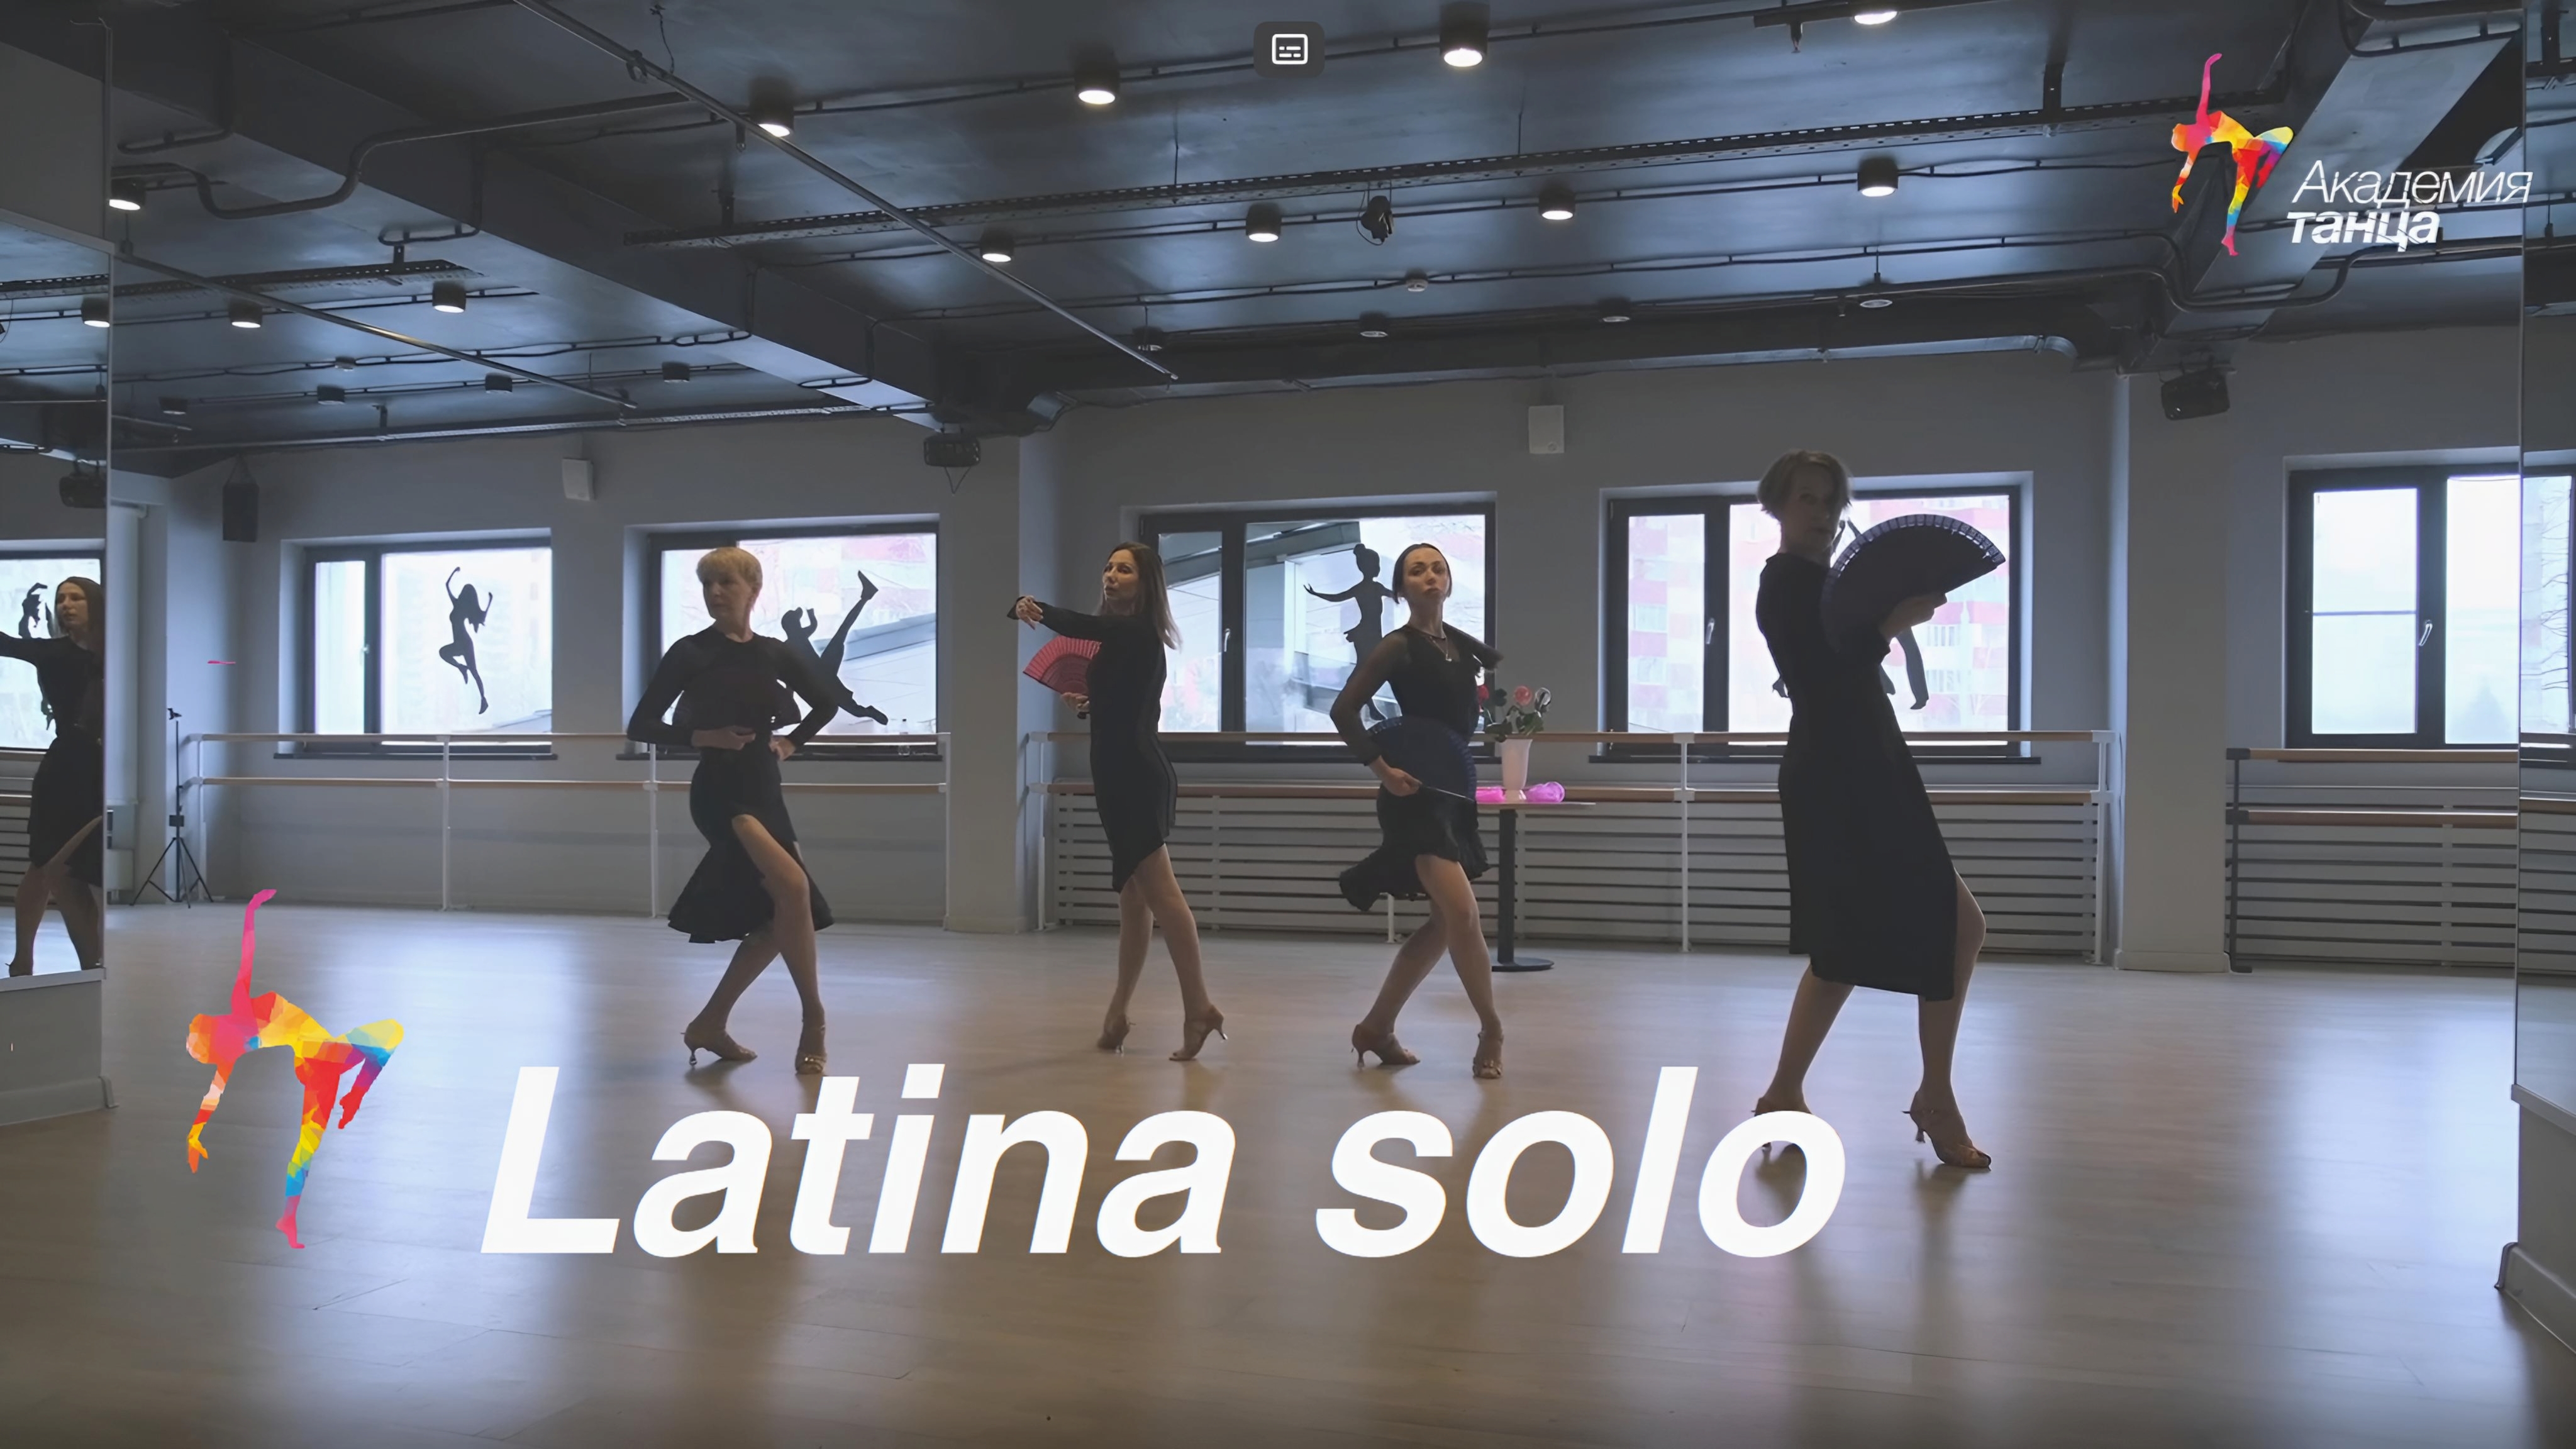 Latina solo - Академия танца